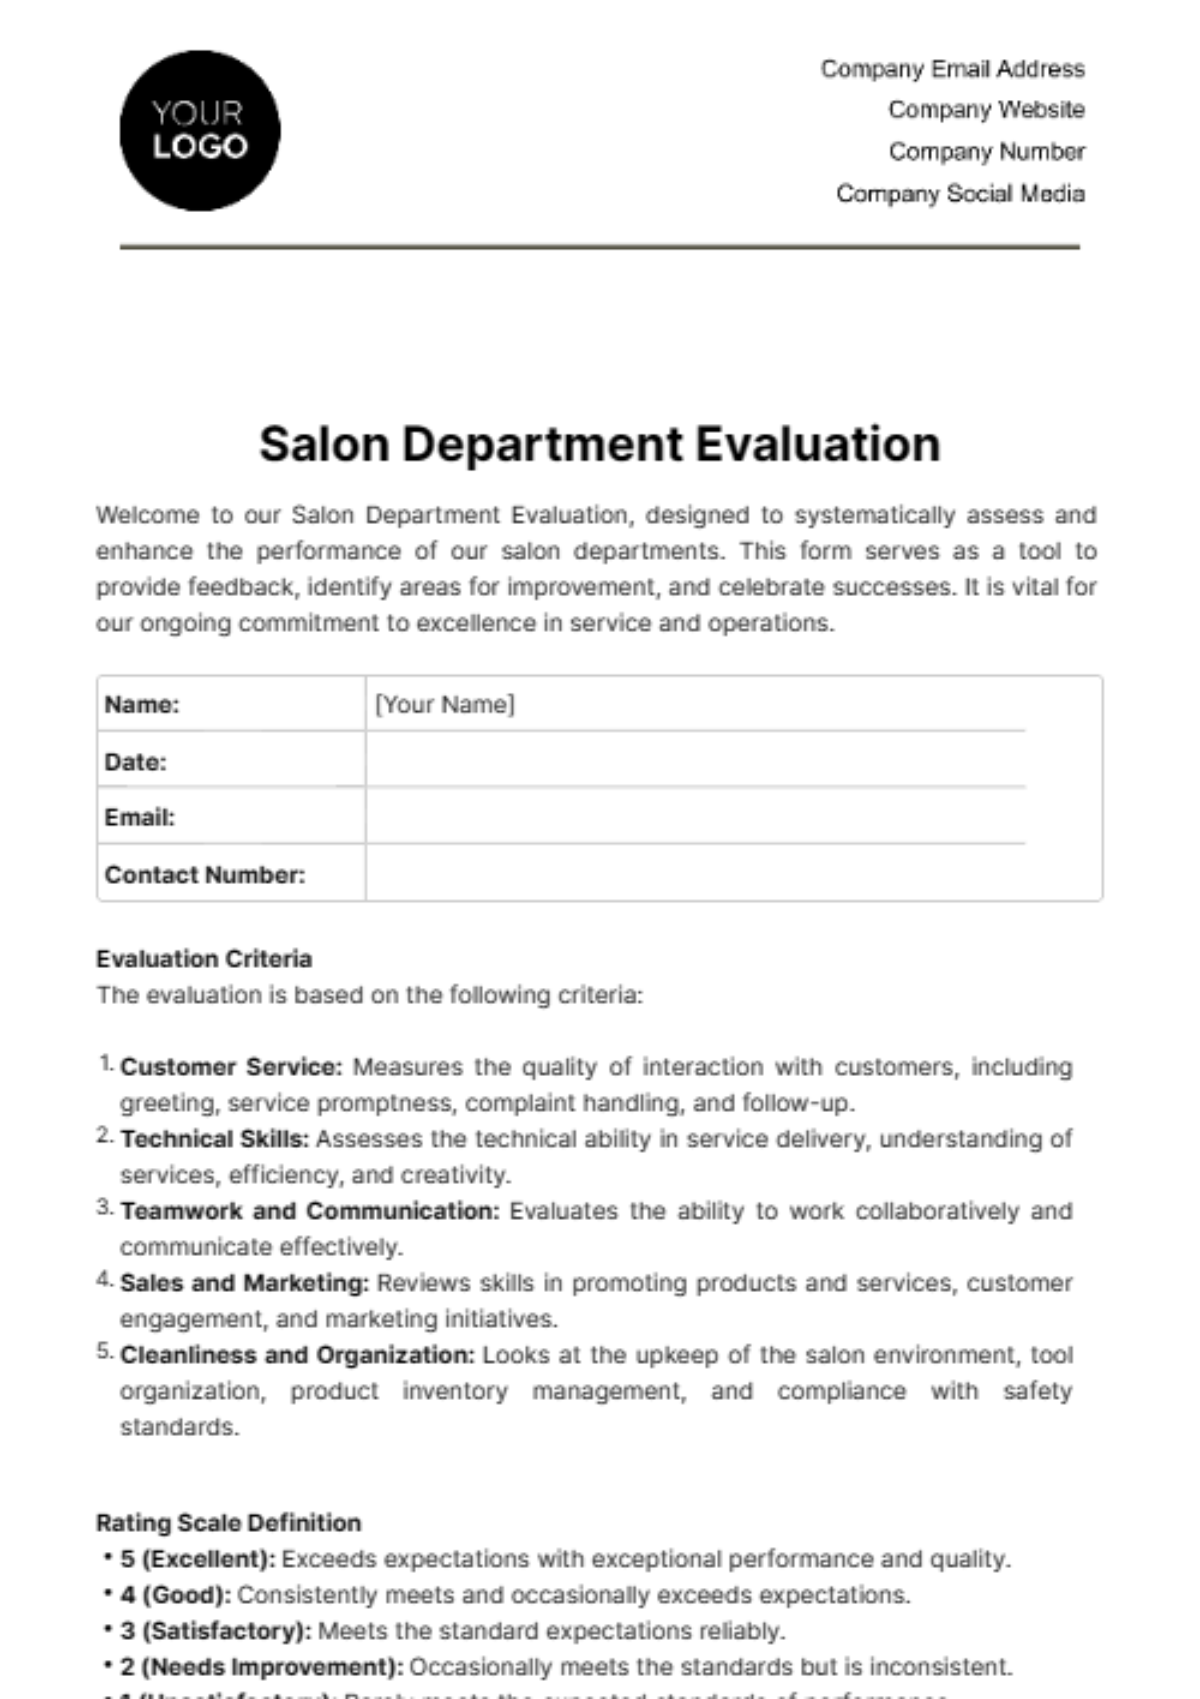 Free Salon Department Evaluation Template